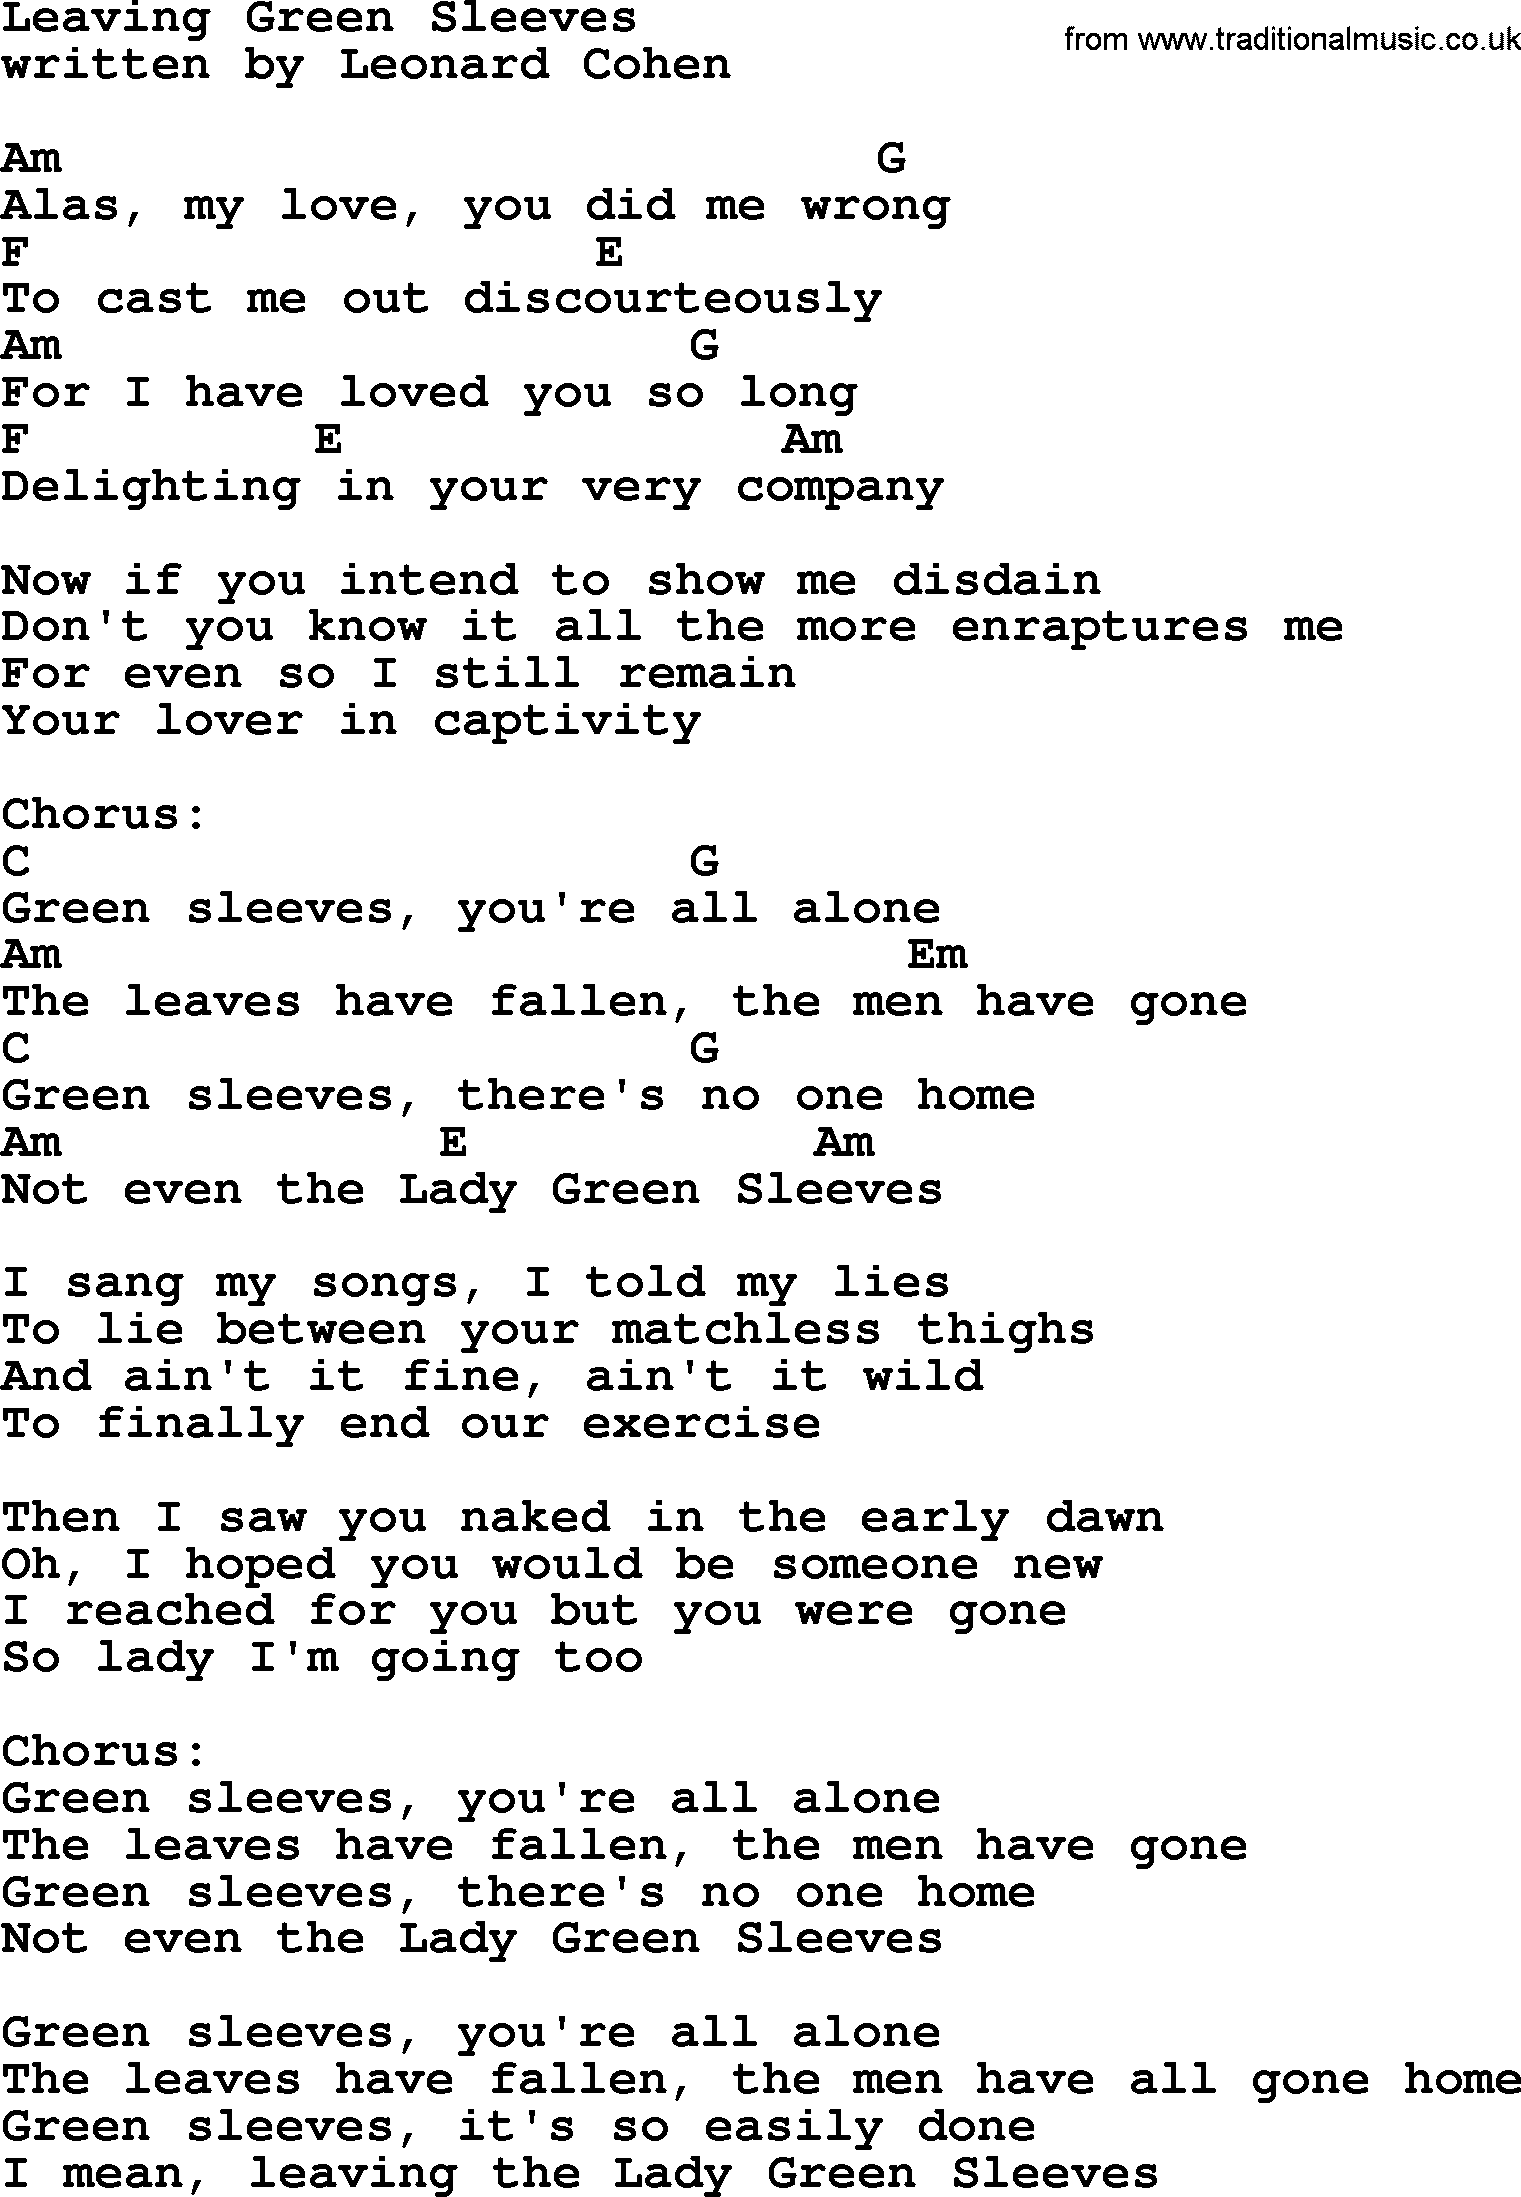 Leonard Cohen song Leaving Green Sleeves, lyrics and chords